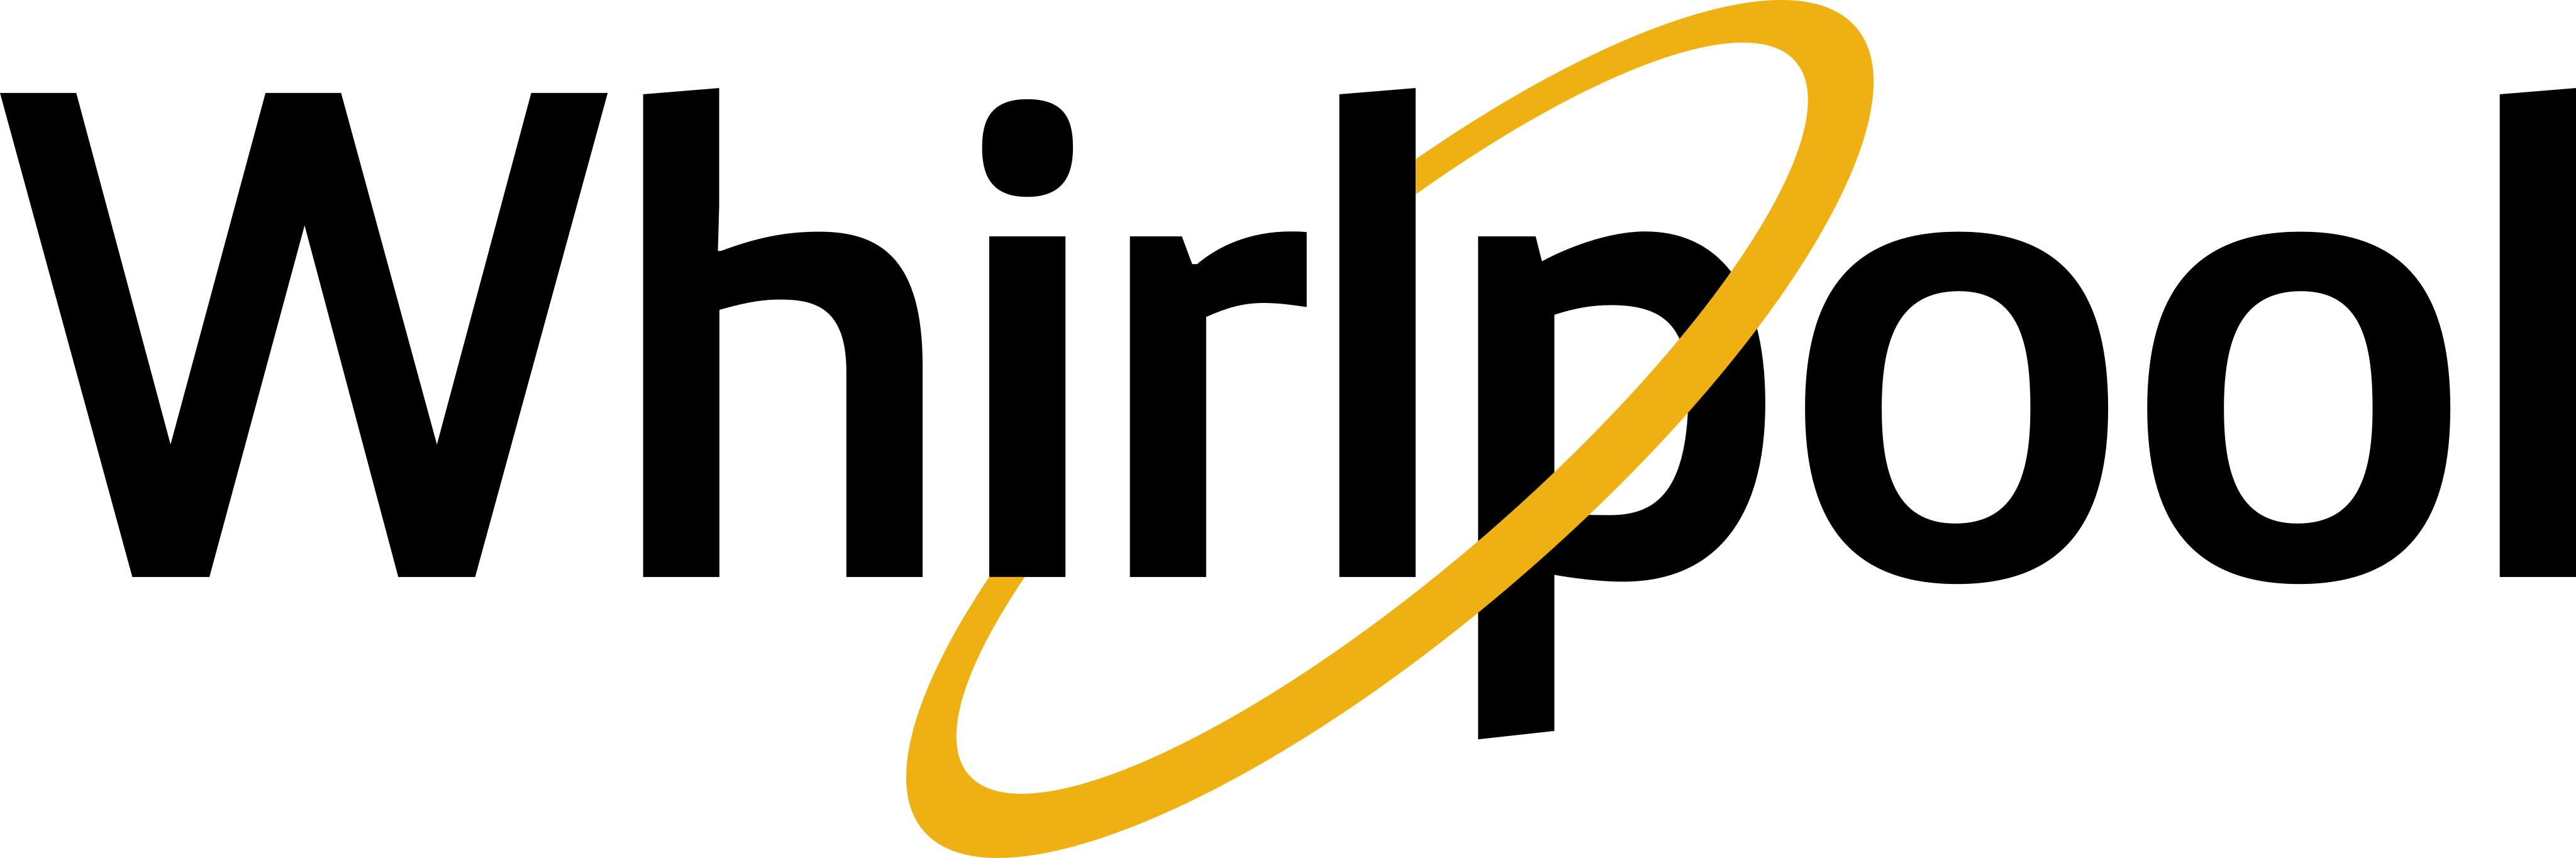 whirlpool logo - Whirlpool Logo